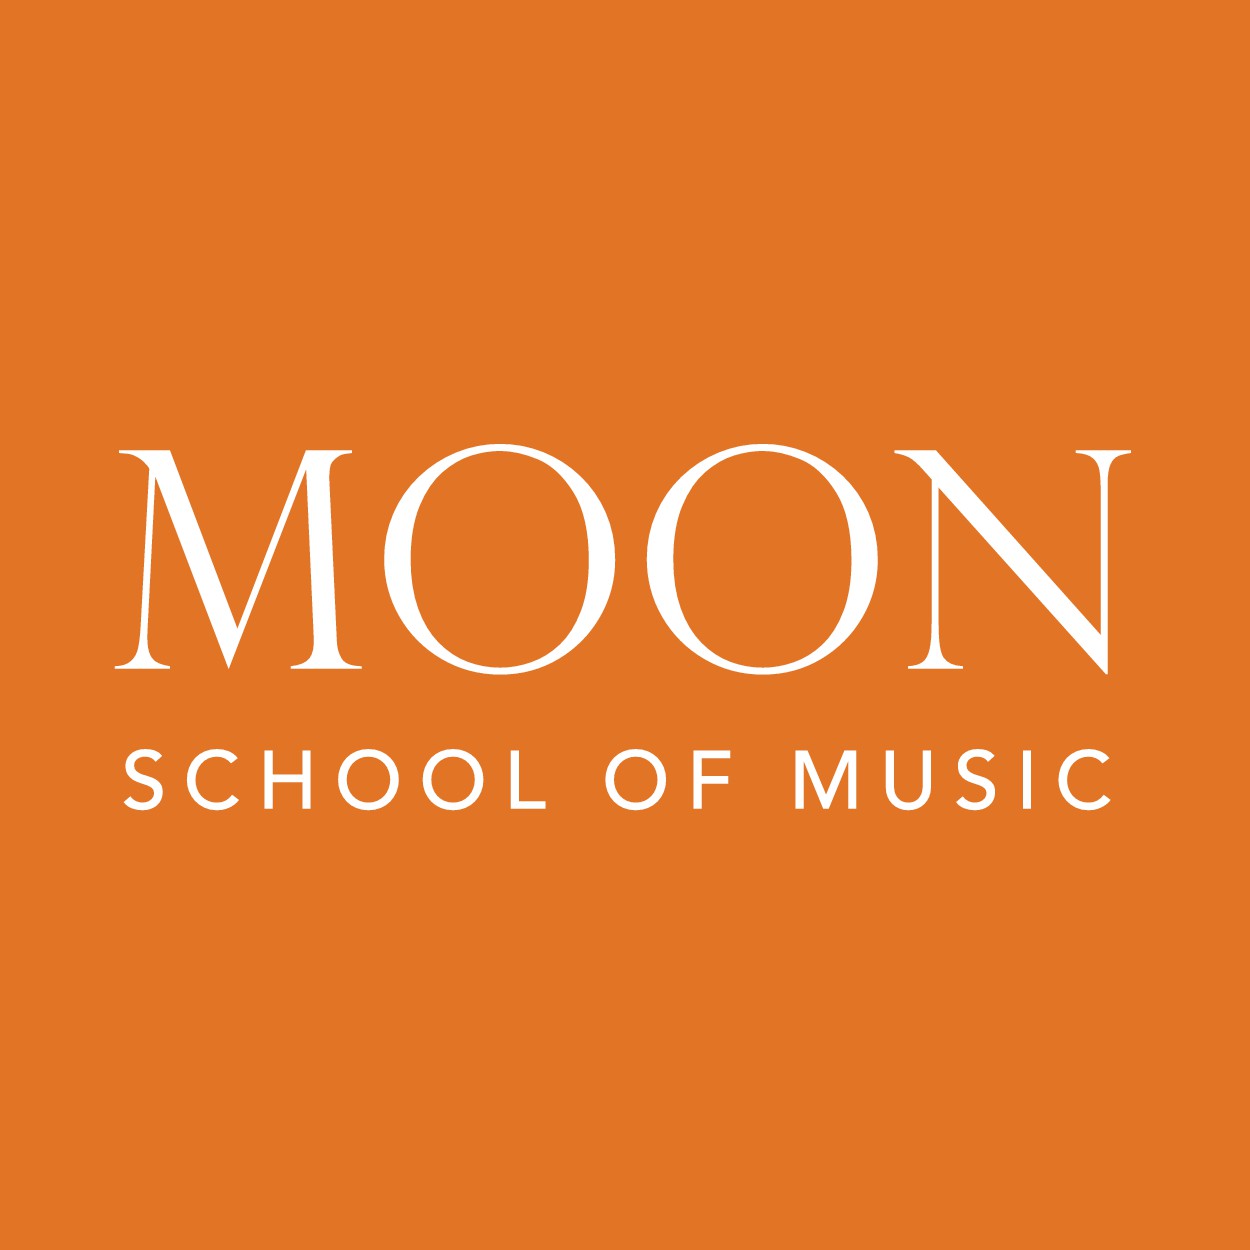 Moon School of Music Orange Square Logo